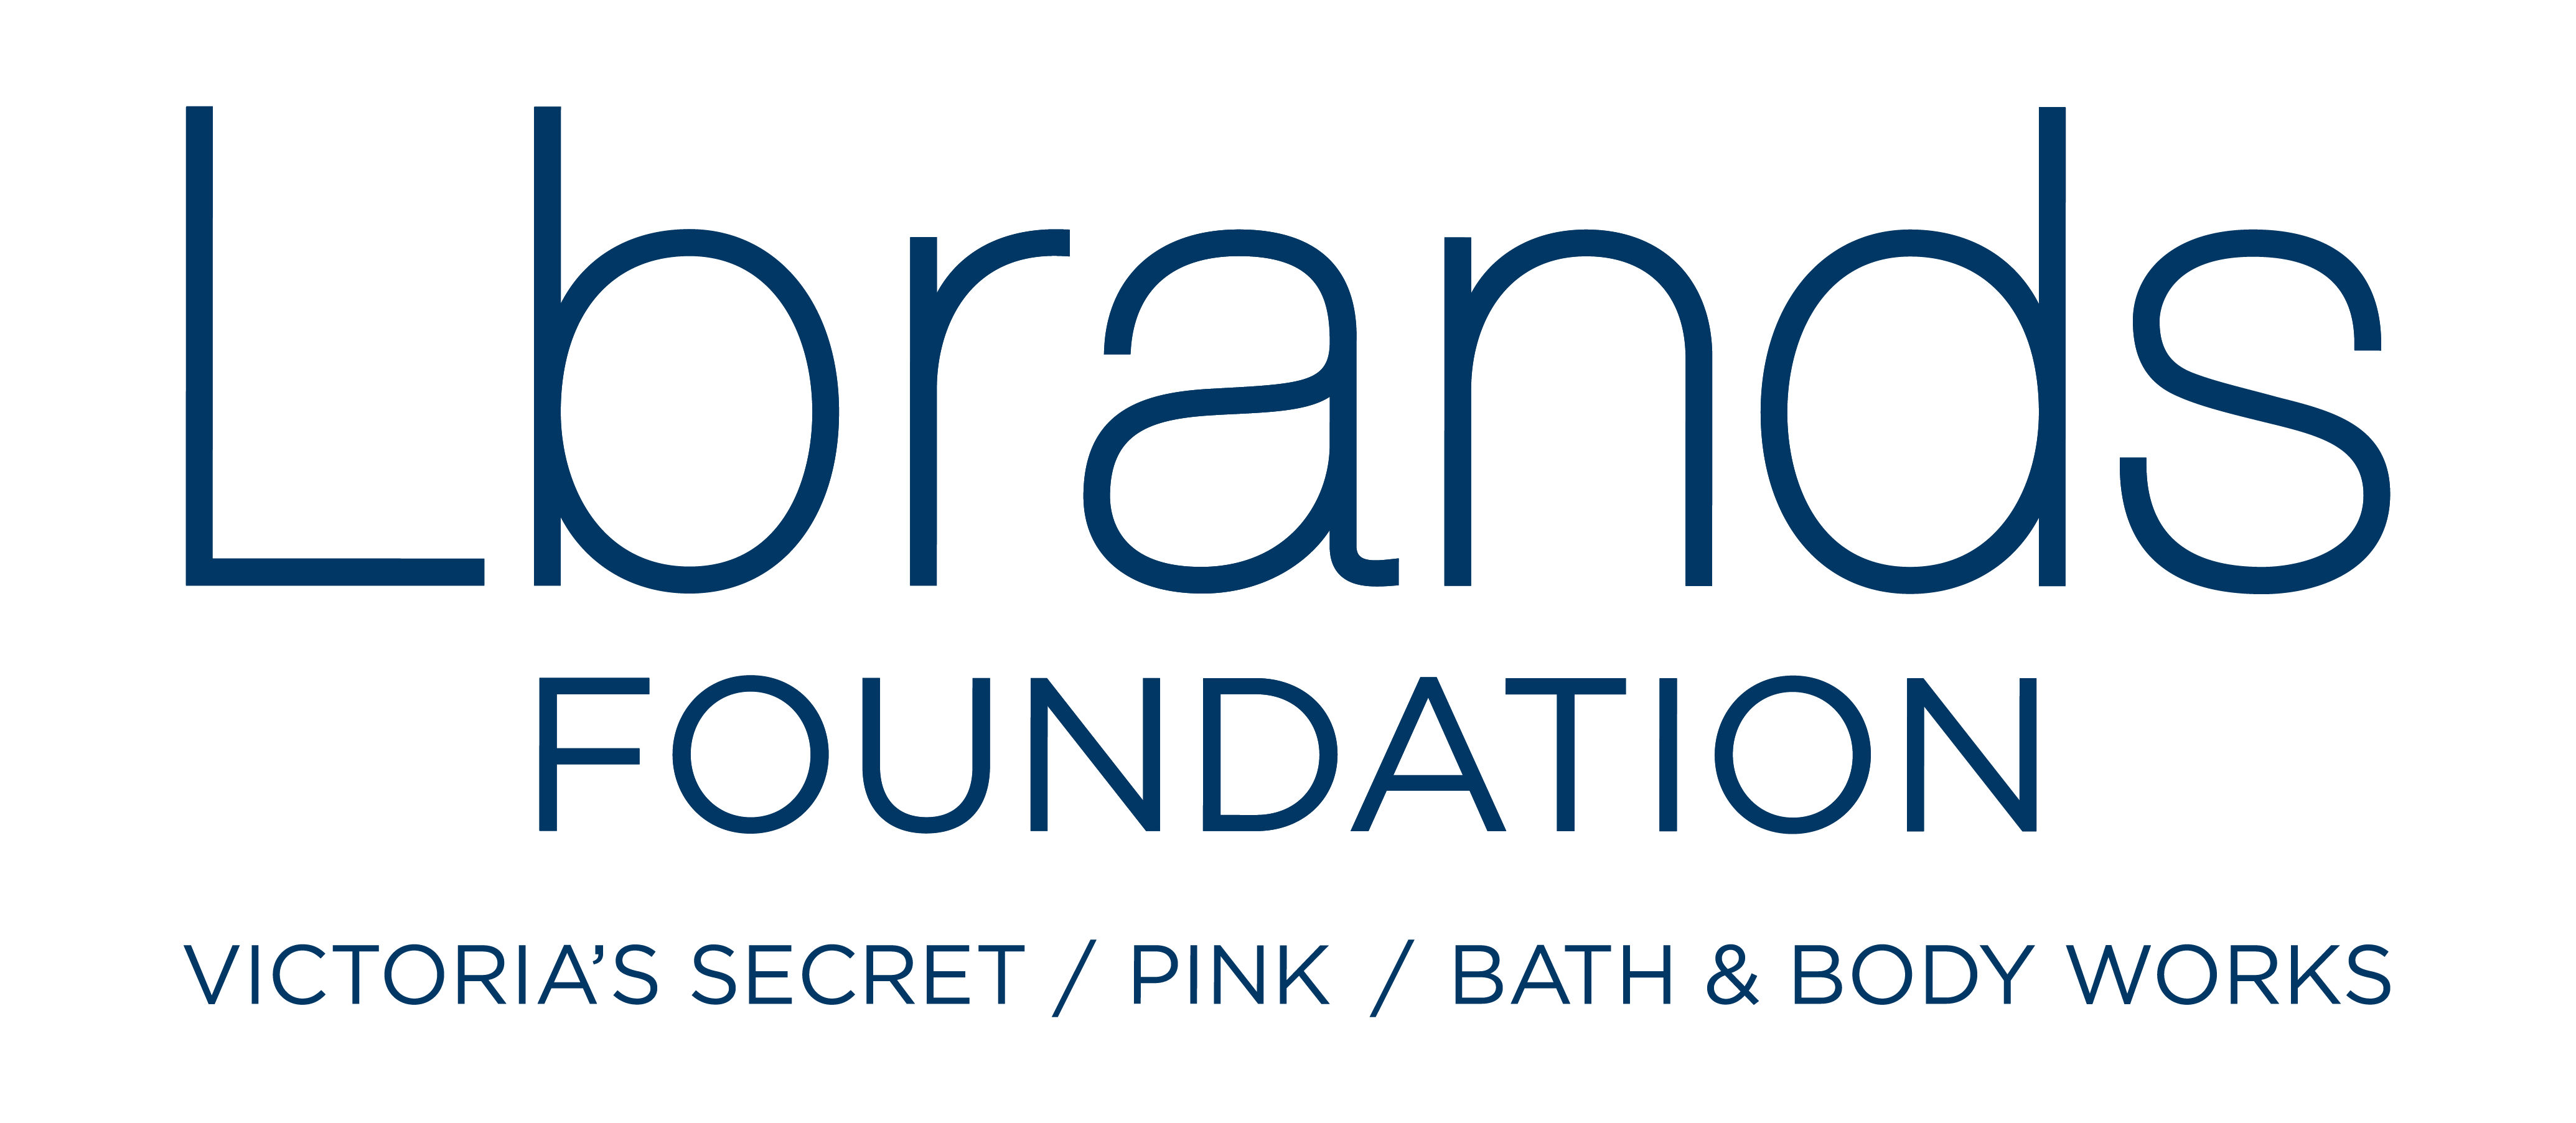 Lbrands Foundation